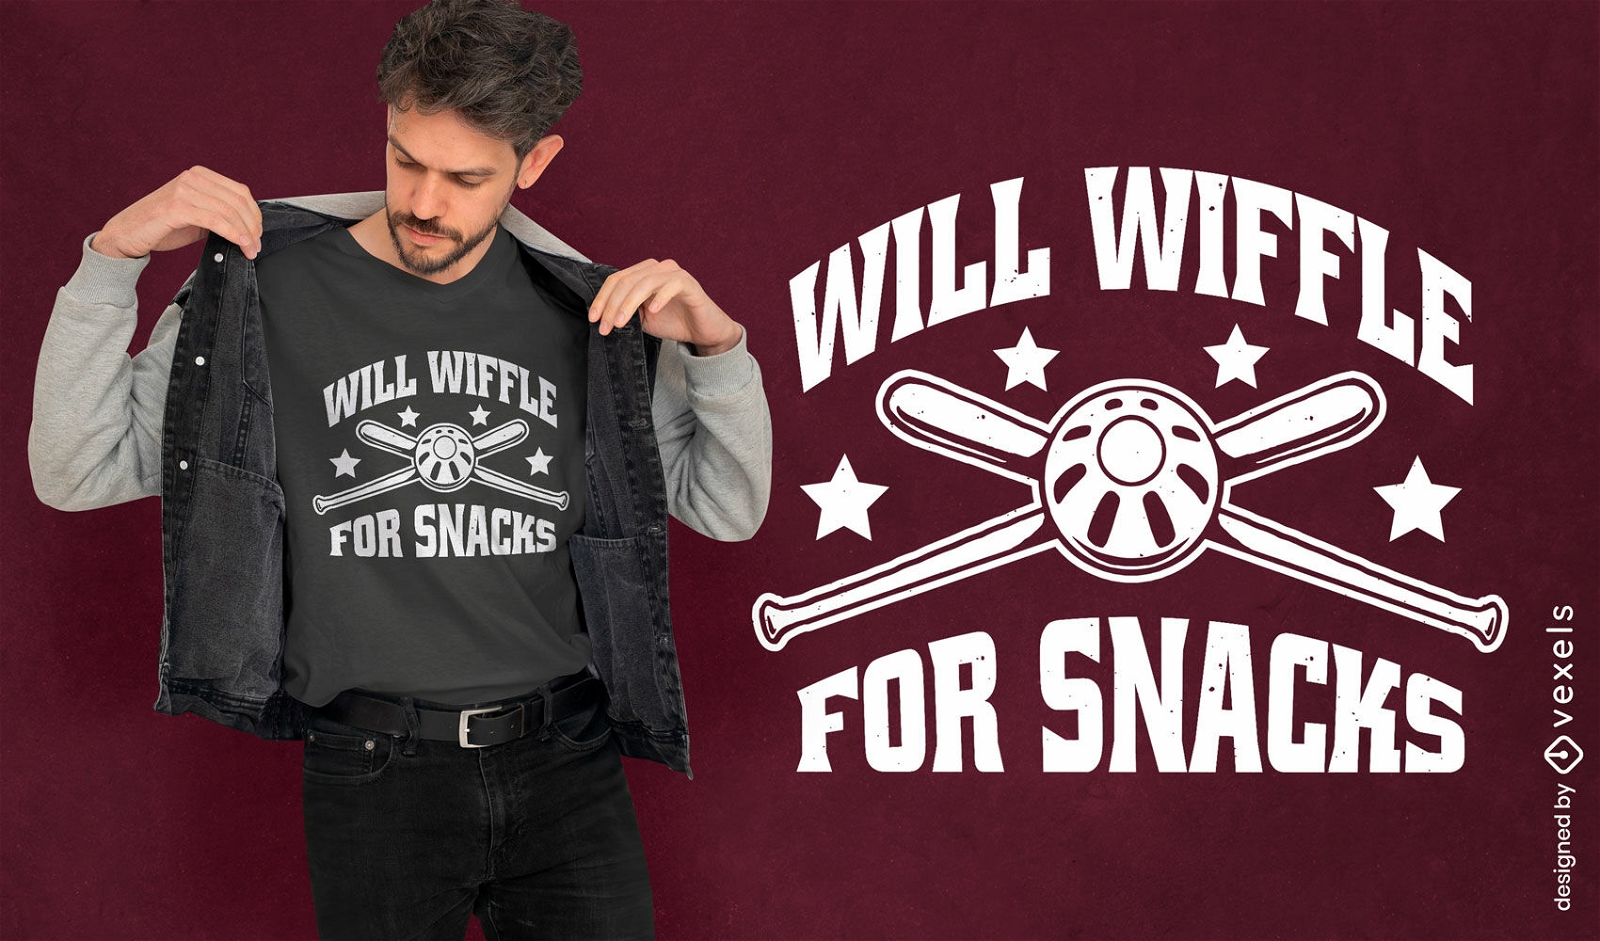 Wiffle for snacks t-shirt design